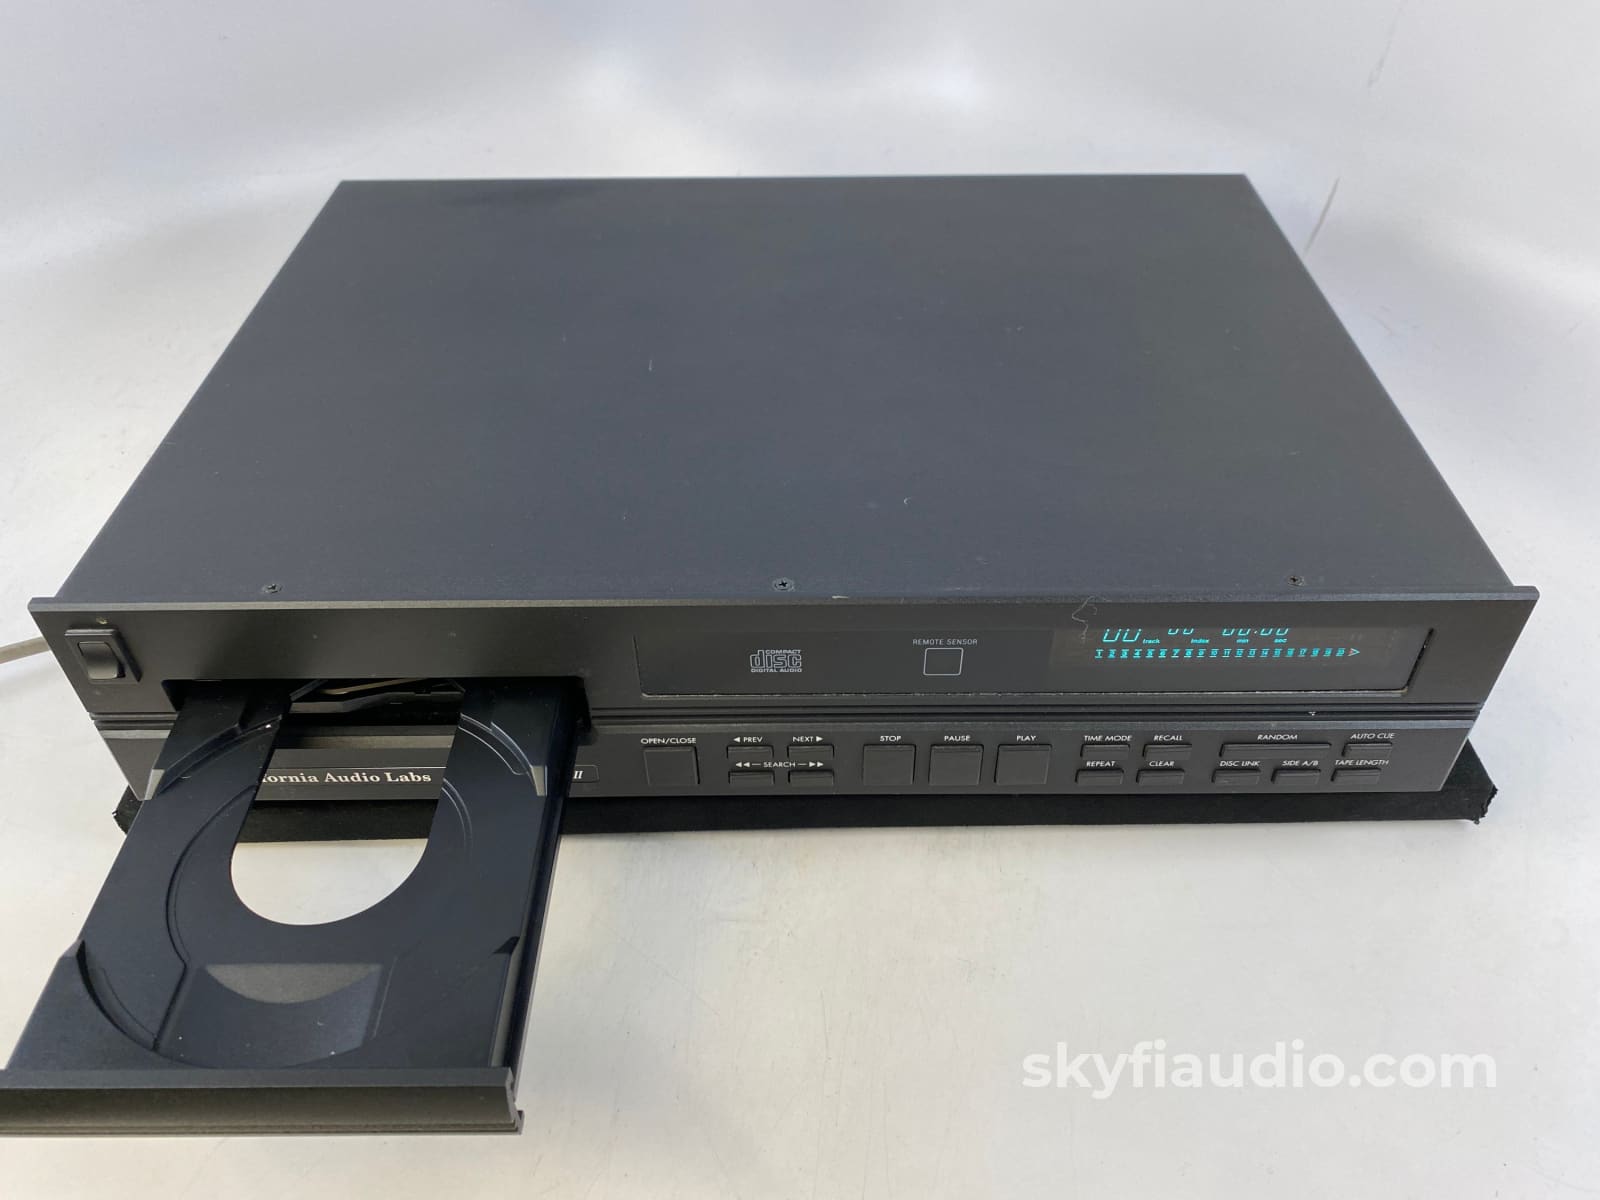 California Audio Labs Icon Mkii Cd Player Skyfi Best Seller + Digital